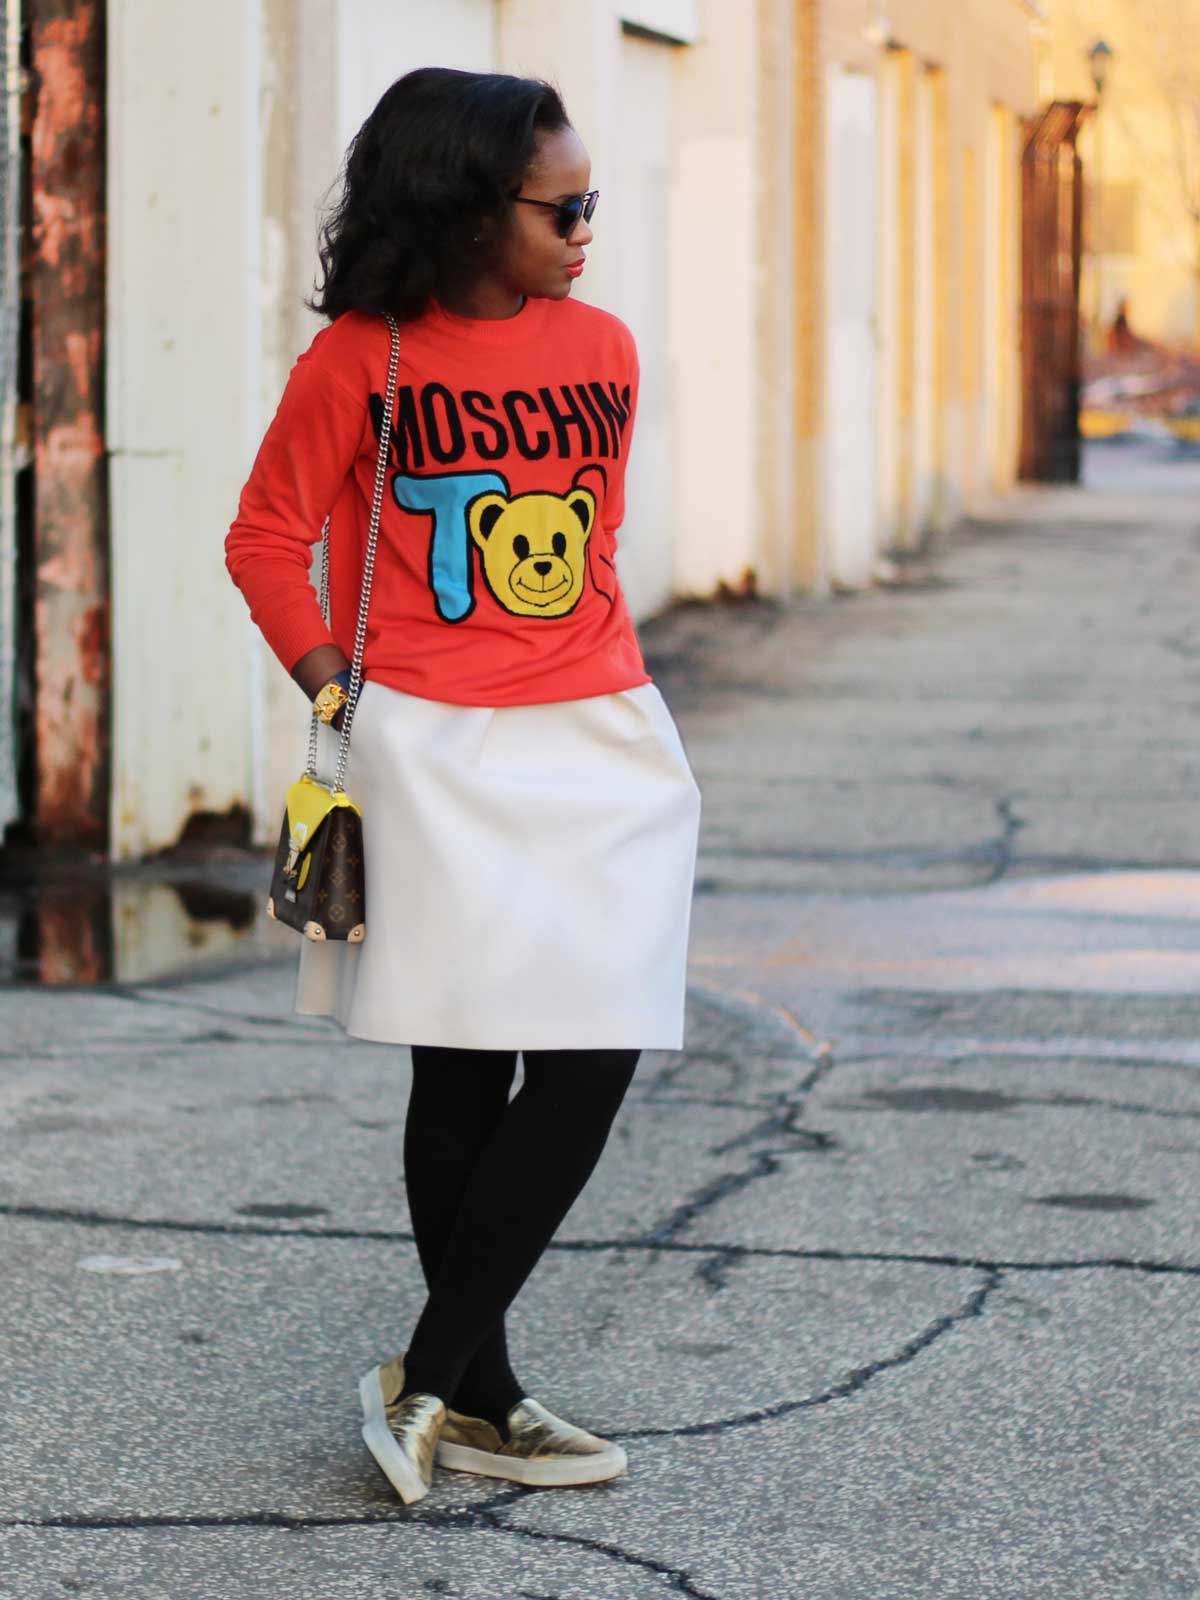 Moschino Toy sweater blogged by Liz Lizo